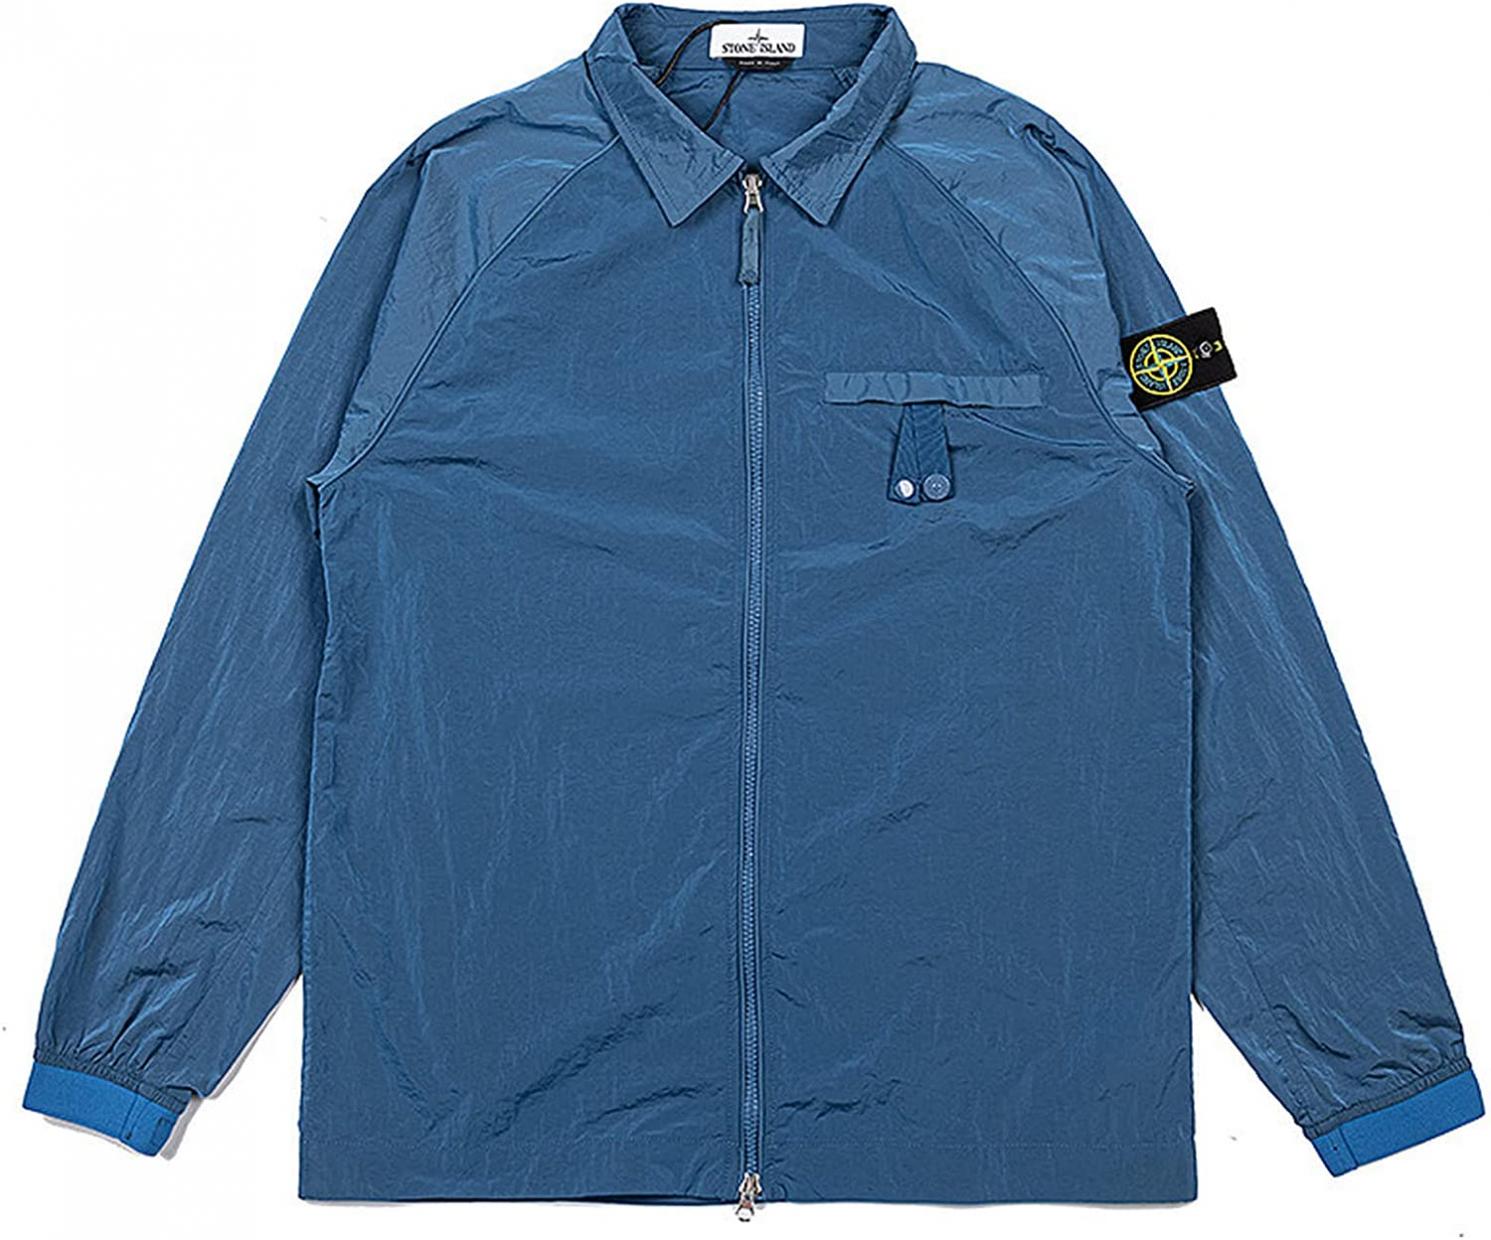 Stone Island Jacket Hip Hop Metallic Color Change Nylon Casual Jacket Trend Unisex Outerwear